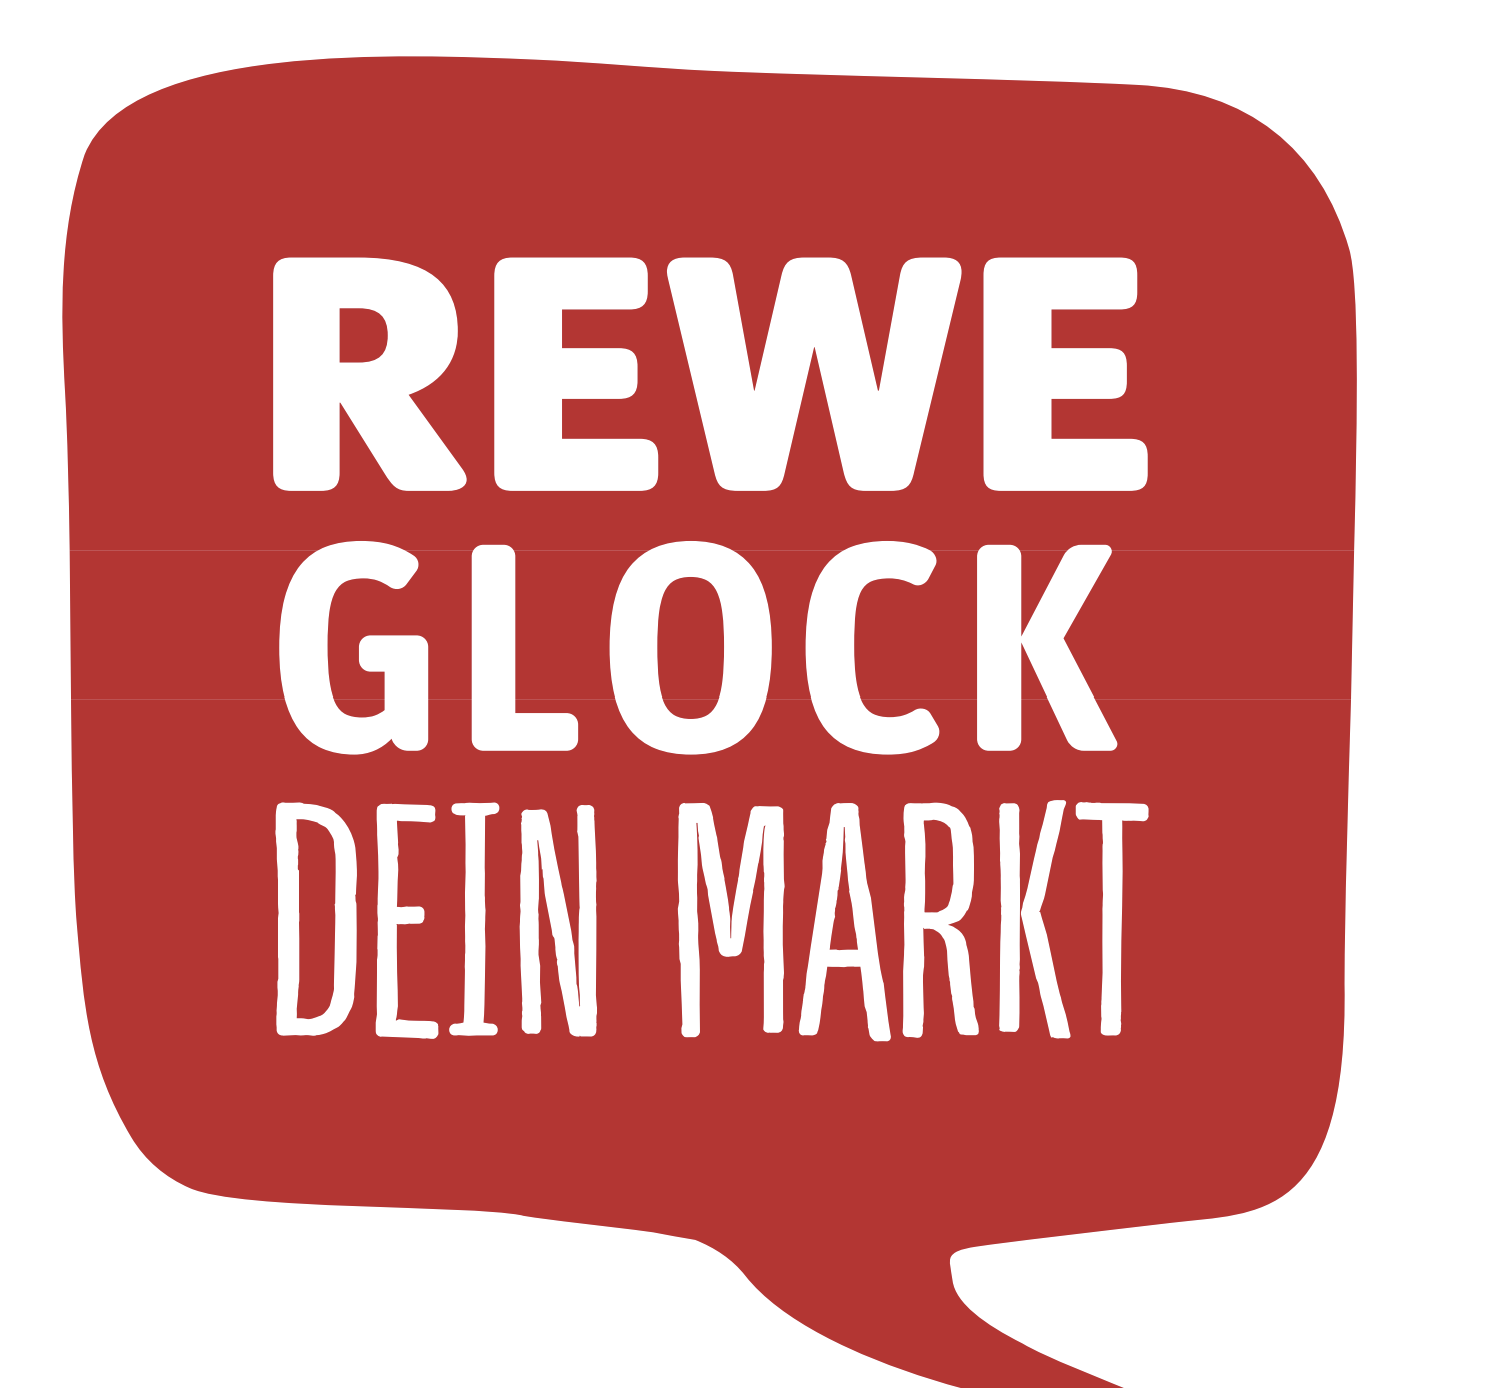 Rewe Glock